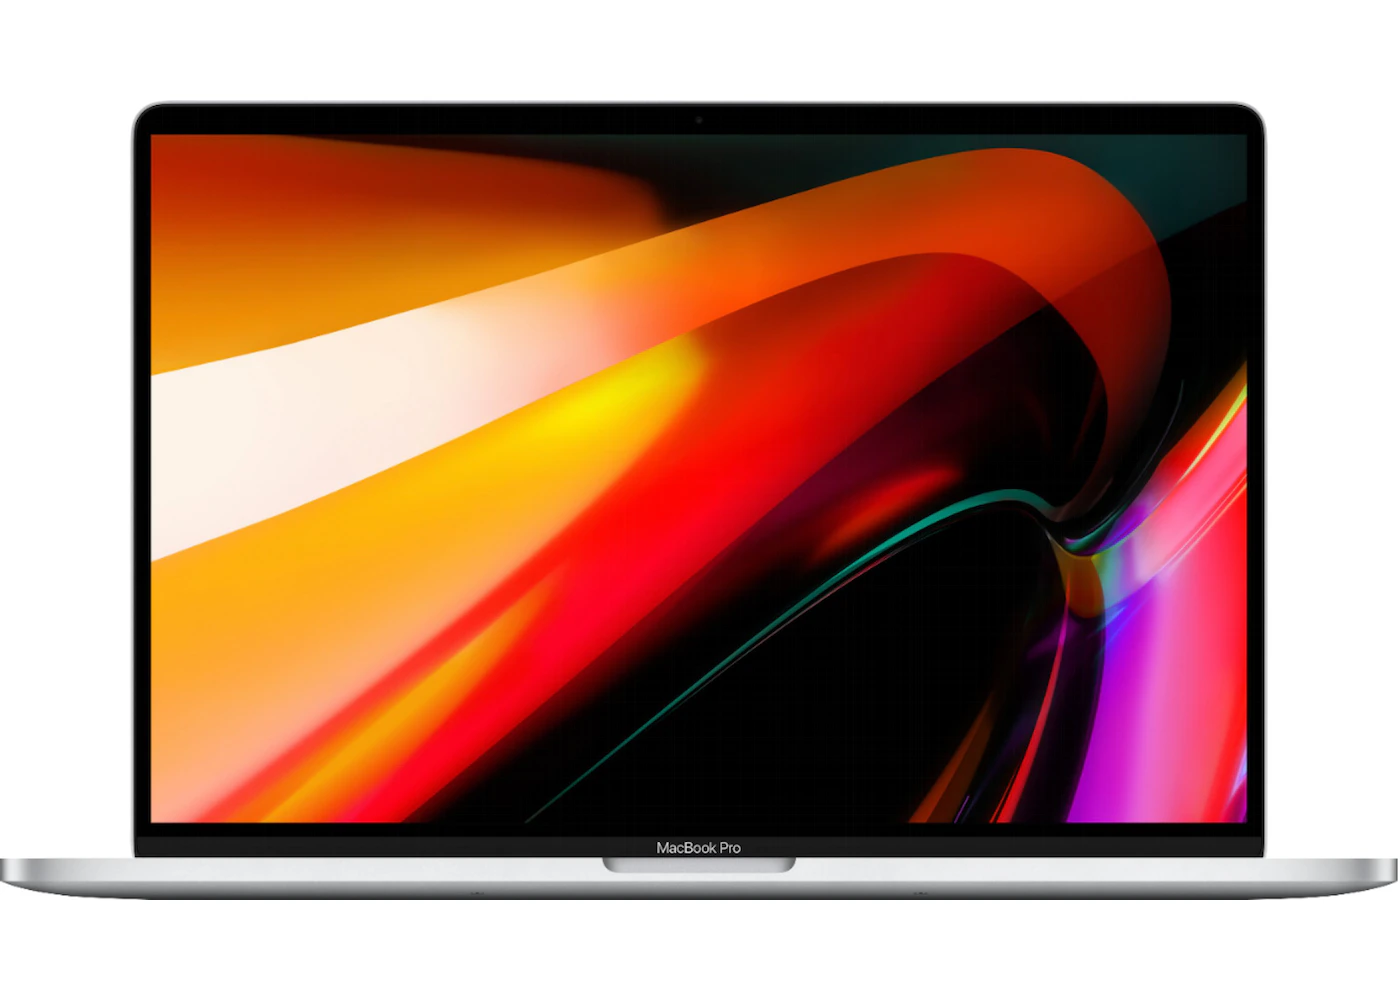 Apple MacBook Pro 16 Inch Intel Core i7 16GB RAM 512GB SSD AMD Radeon Pro 5300M OS MVVL2LL/A Silver - US